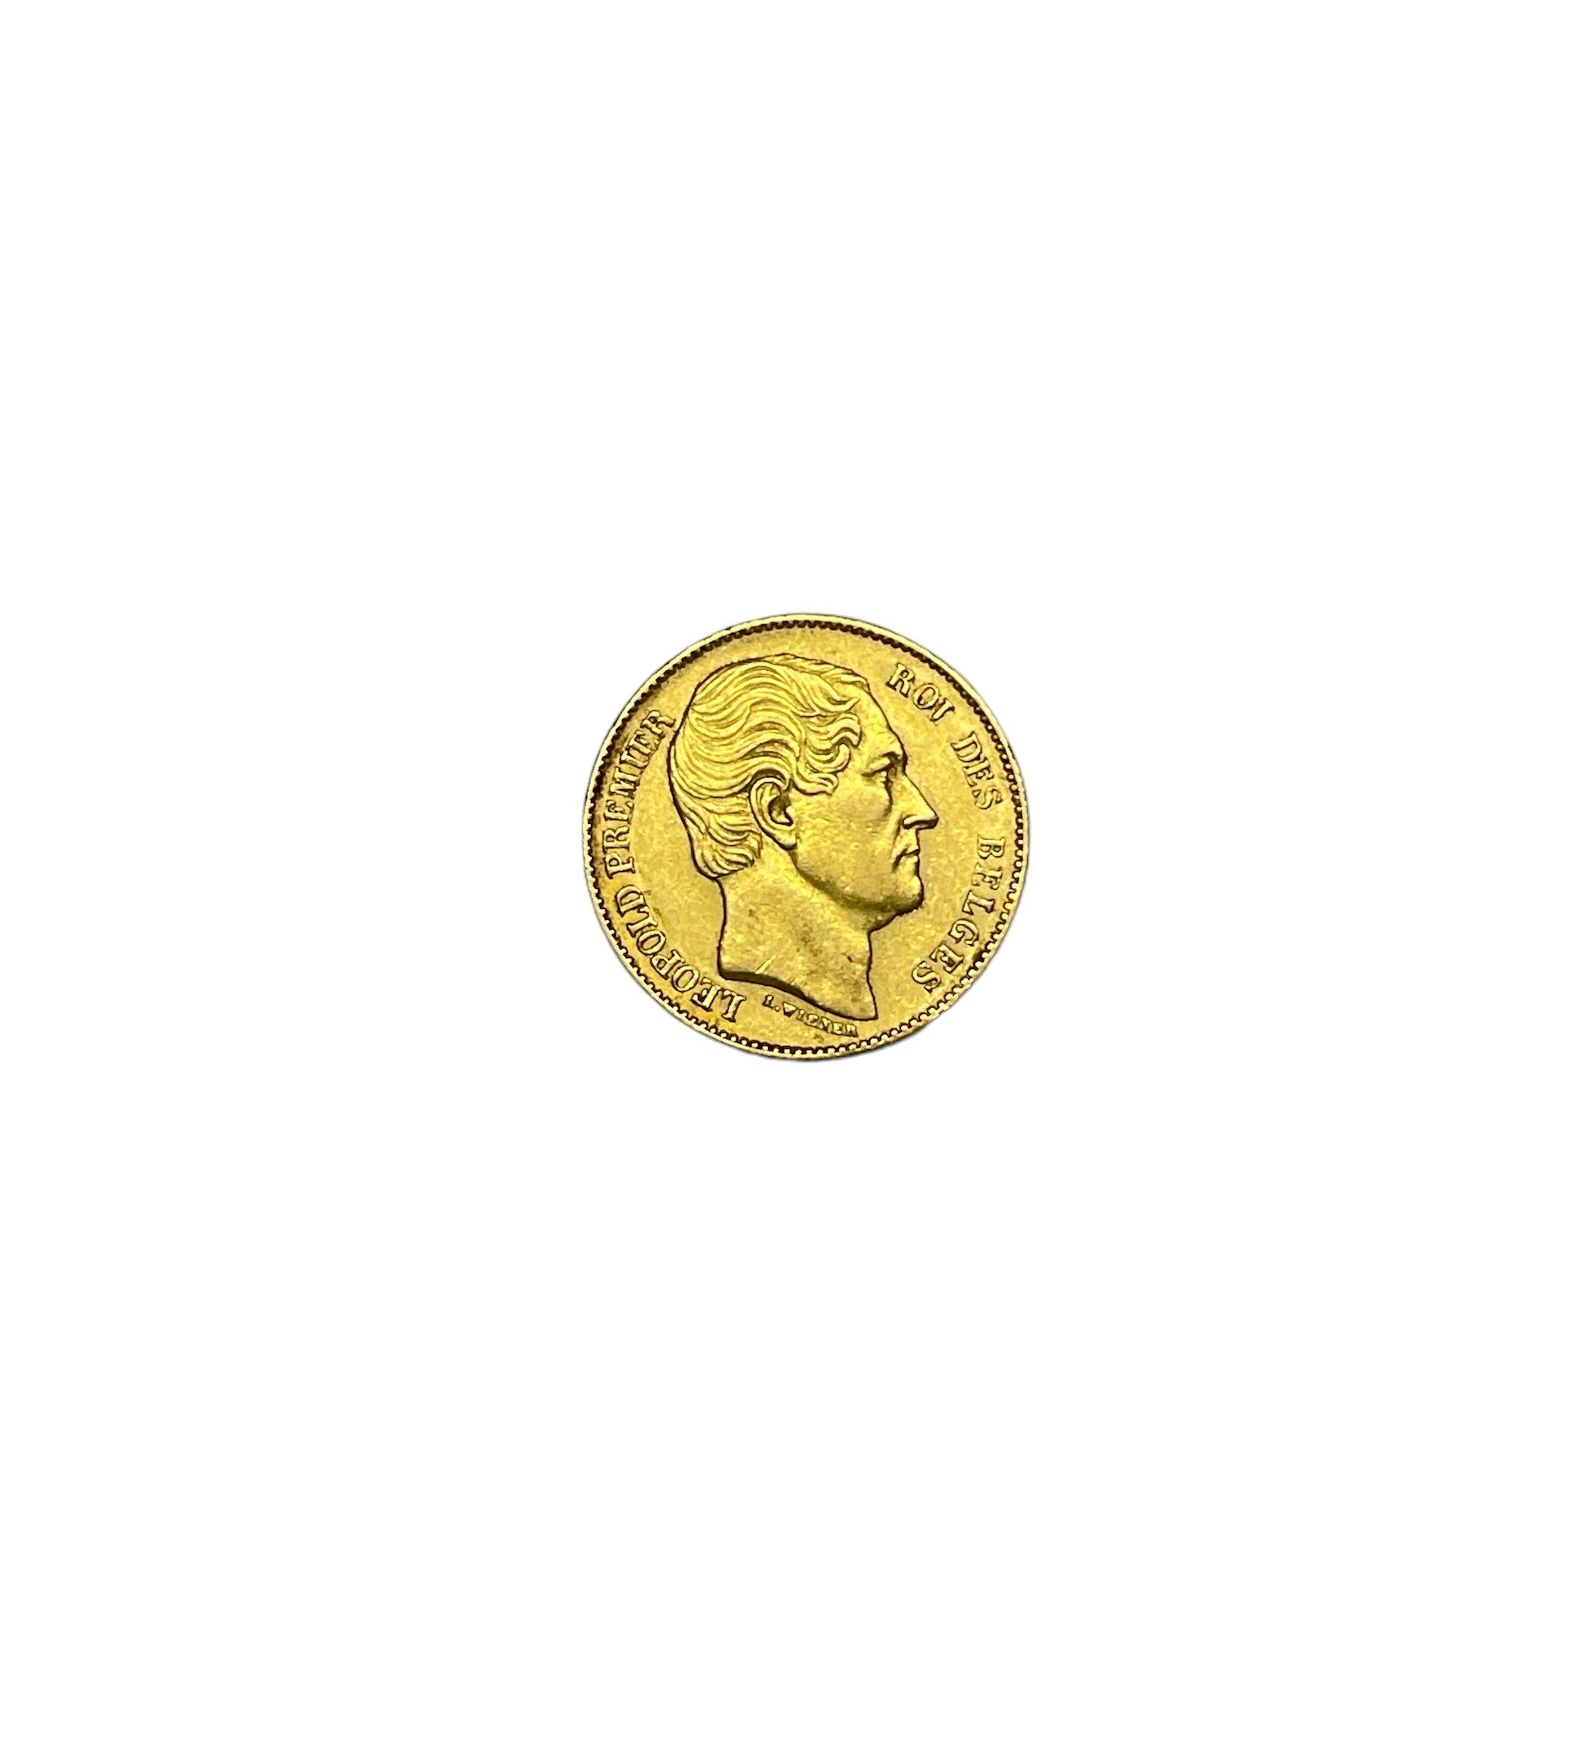 Null FRANCIA
20 francos oro 1865
Peso : 6 g